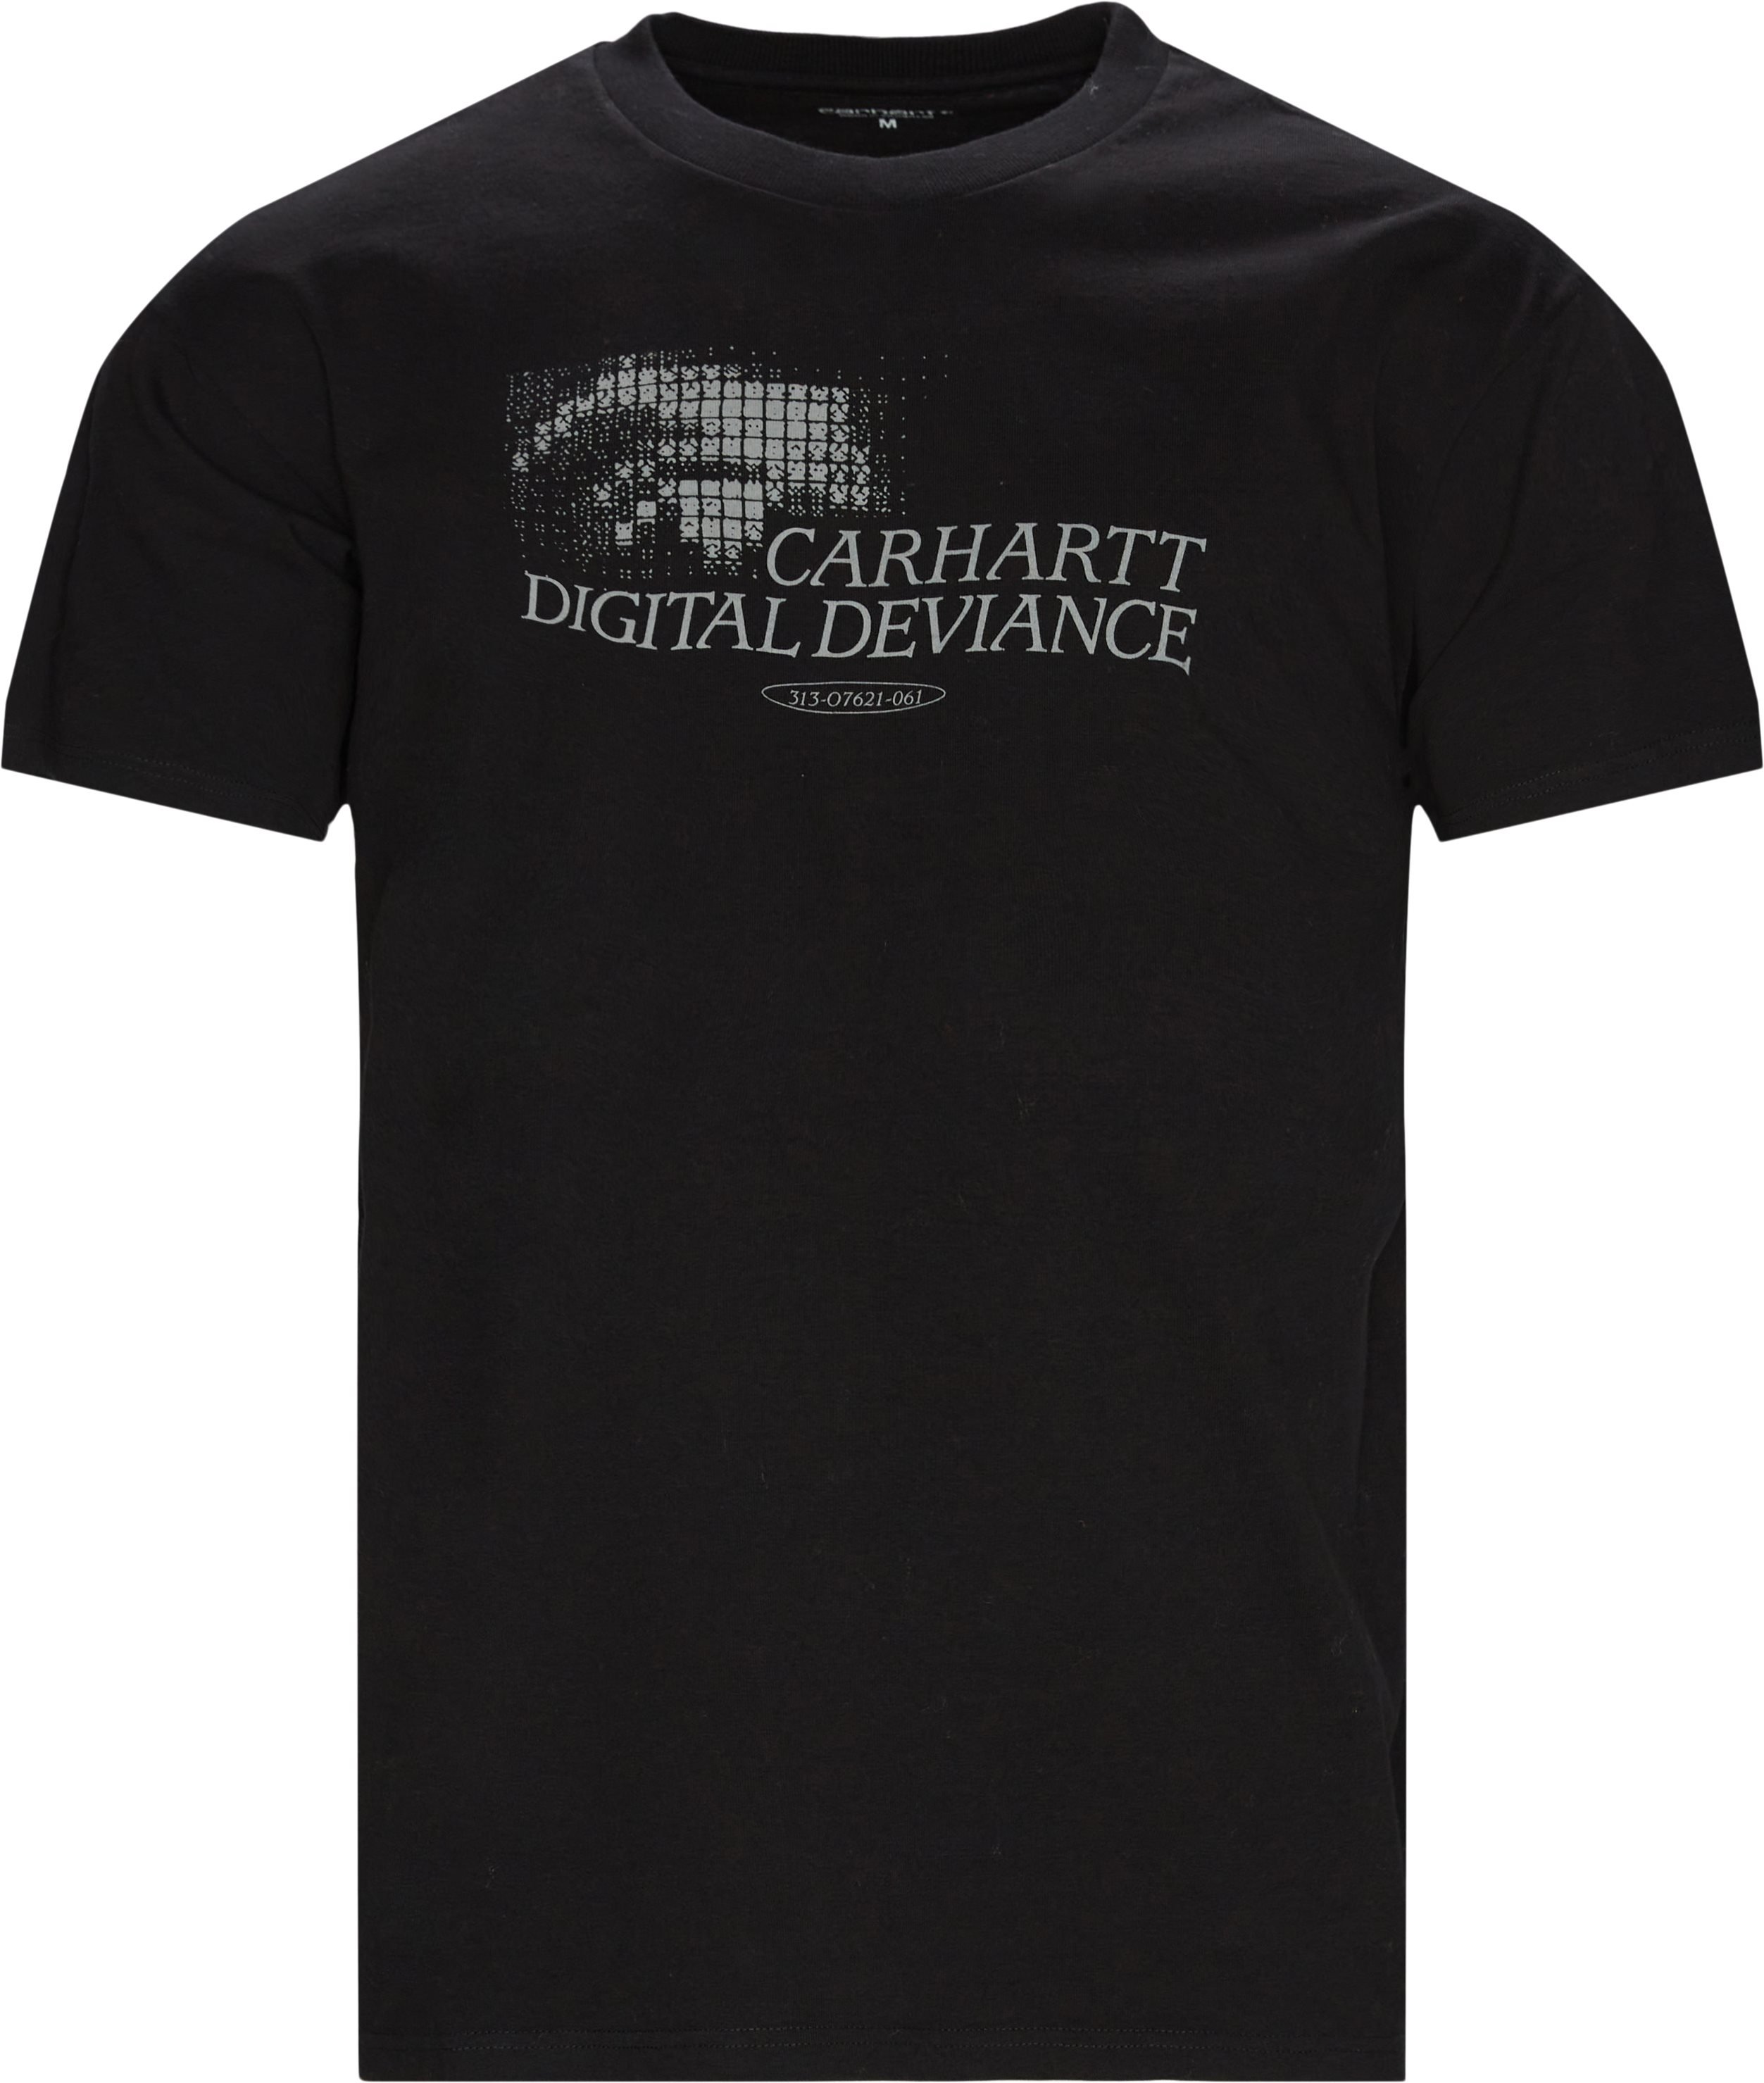 Digital Deviance Print Tee - T-shirts - Regular fit - Svart